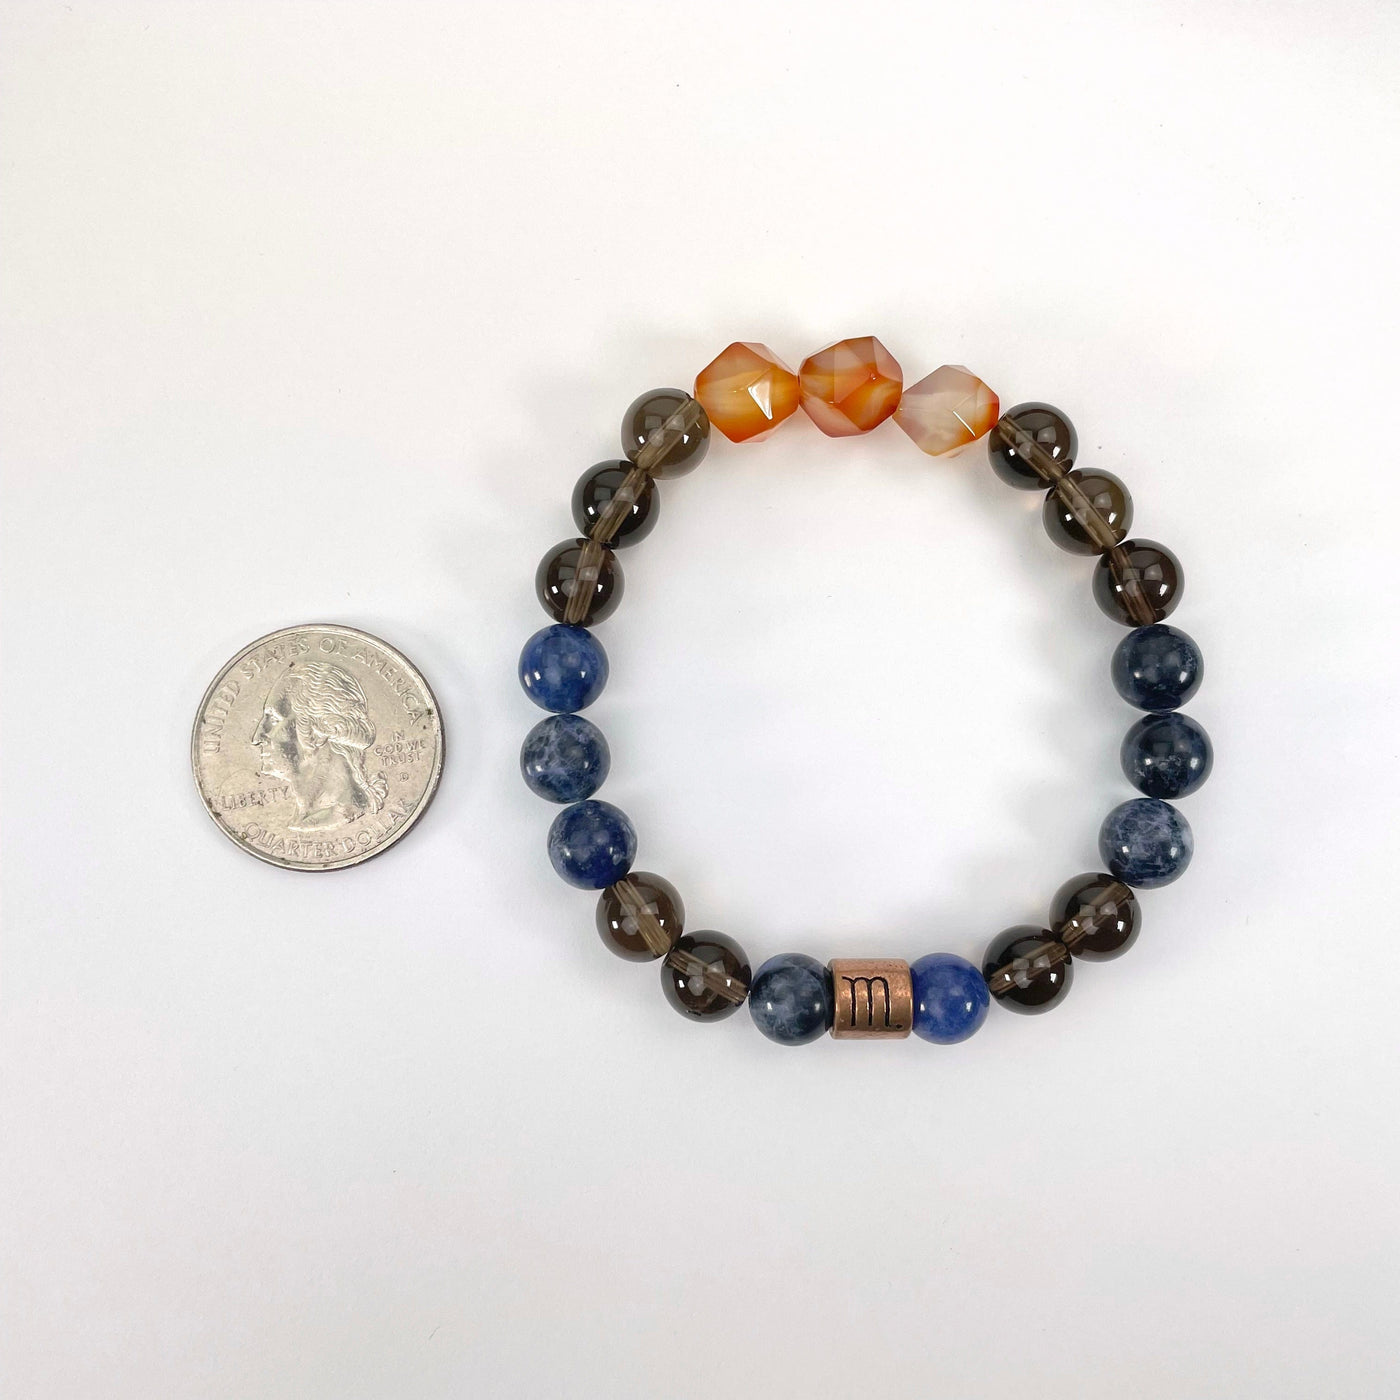 scorpio zodiac bracelet with quarter for size reference